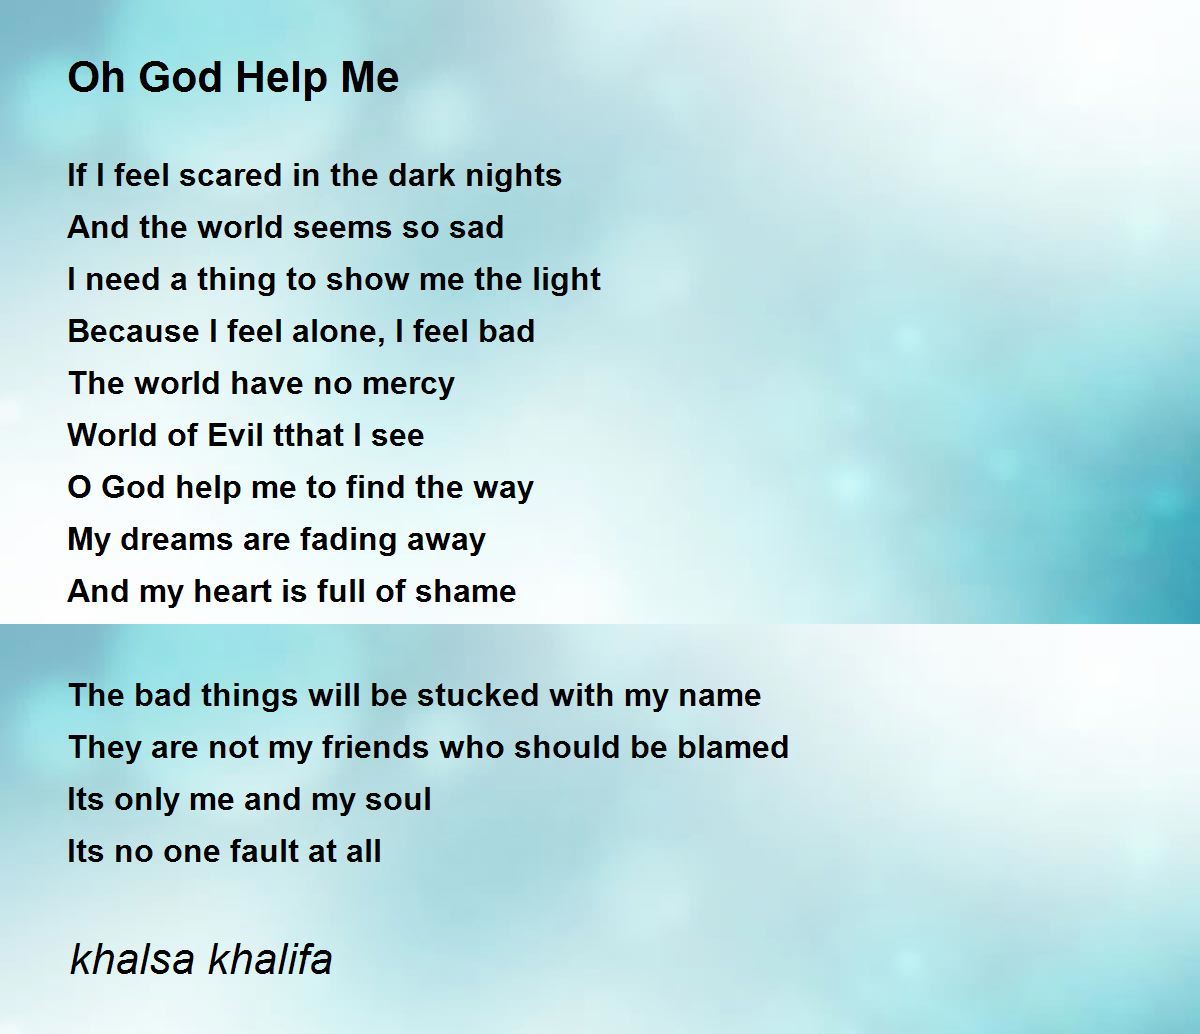 Oh God Help Me - Oh God Help Me Poem by khalsa khalifa